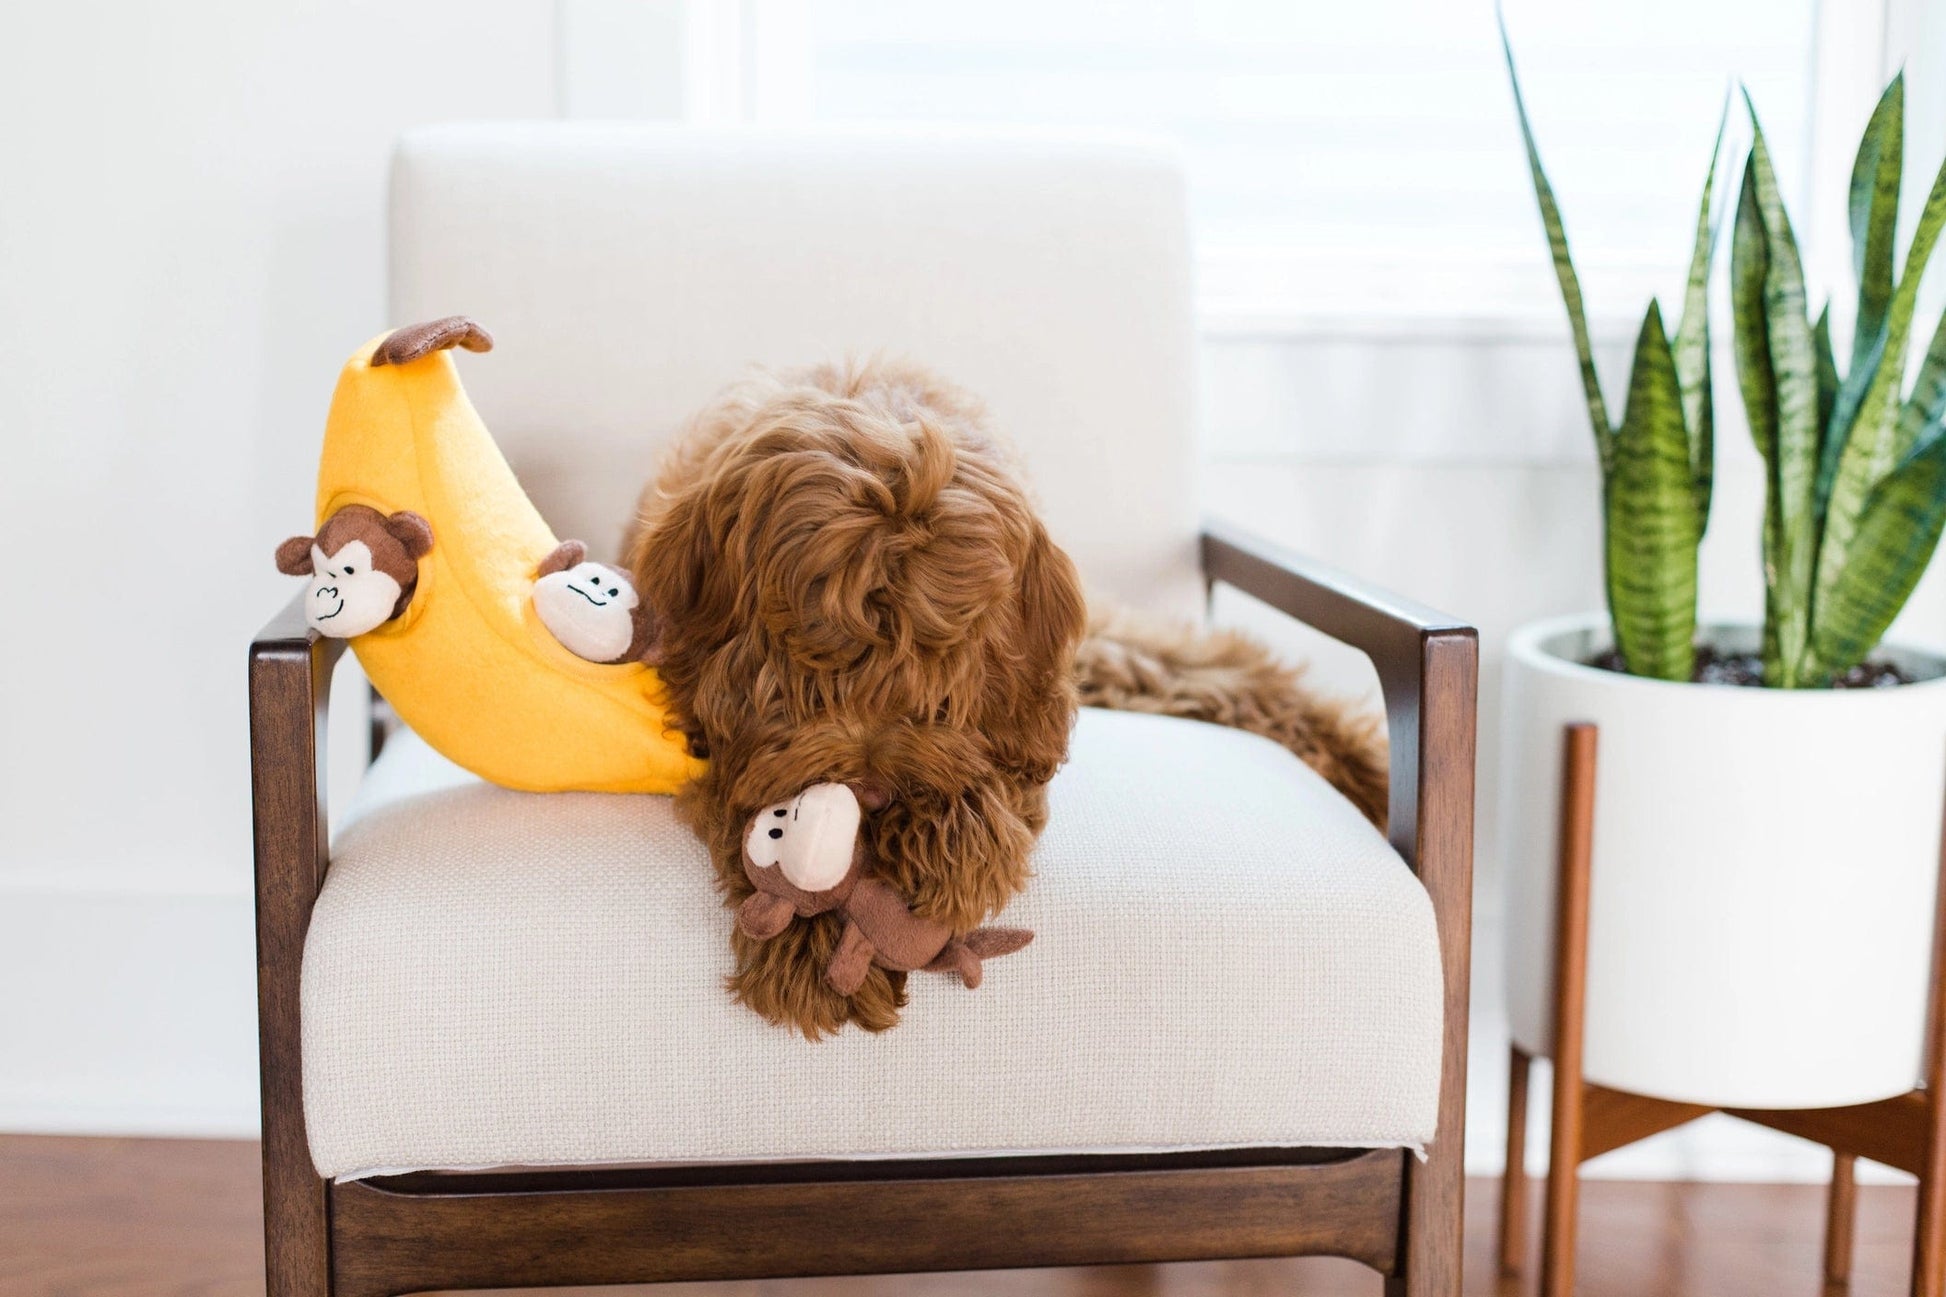 Zippy Paws Animals & Pet Supplies Zippy Burrow® - Monkey 'n Banana - Plush Dog Toy